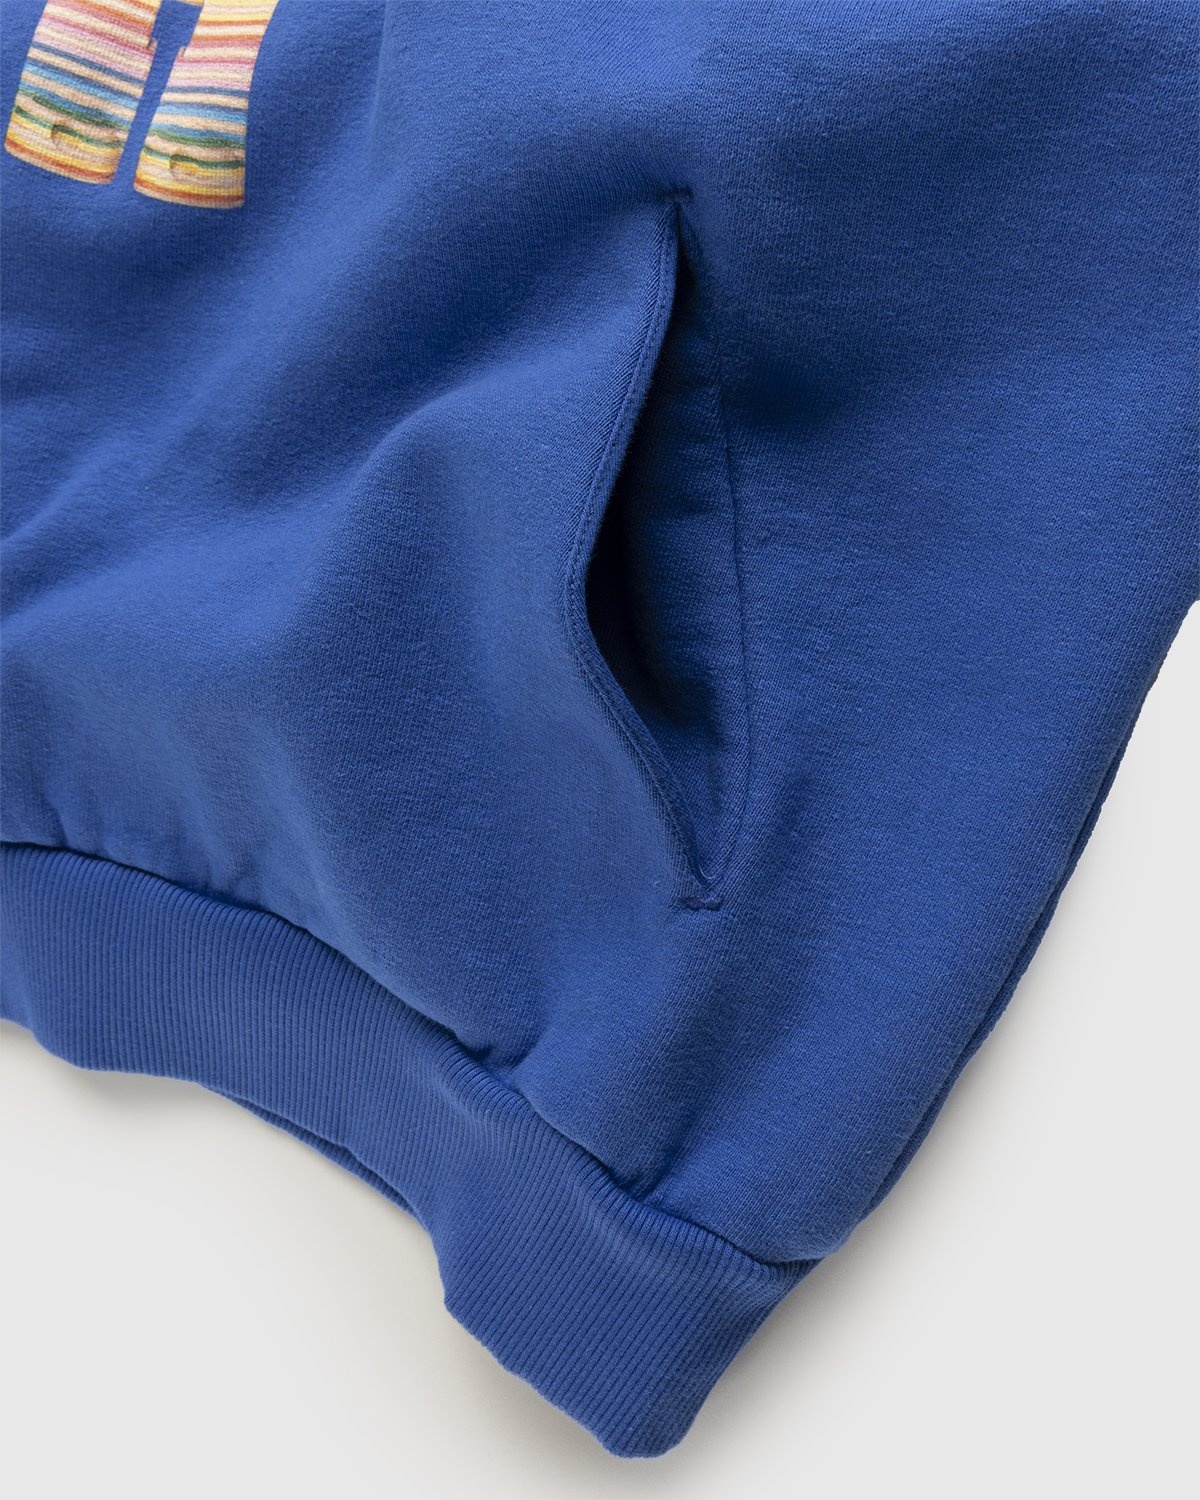 Pangaia x Haroshi – Be@rbrick Recycled Cotton Hoodie Blue - Sweats - Blue - Image 3